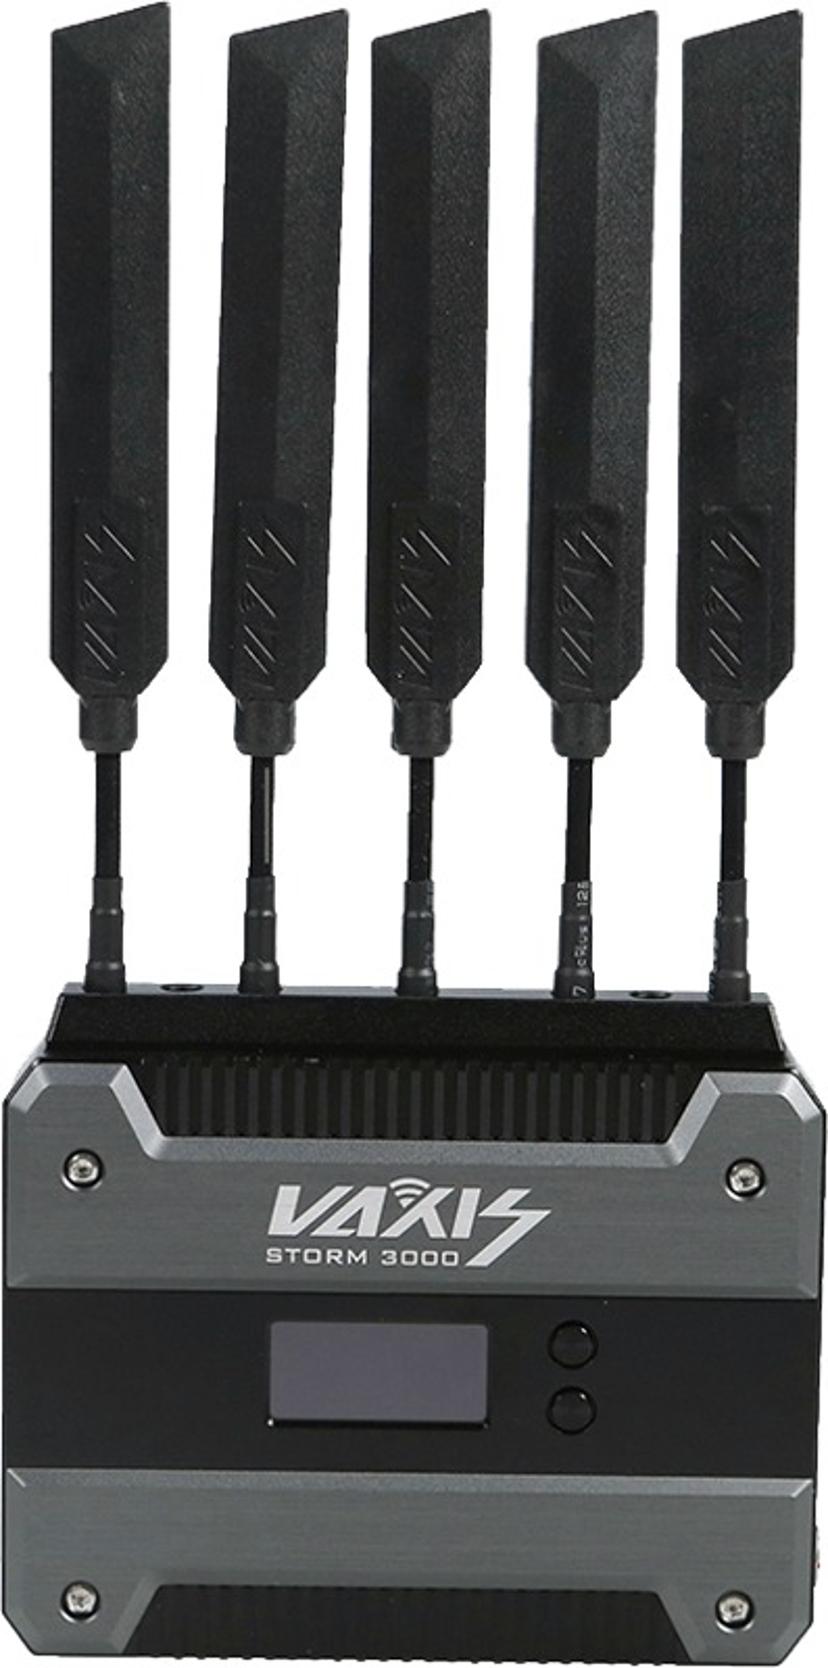 VAXIS Storm 3000 RX (V mount)